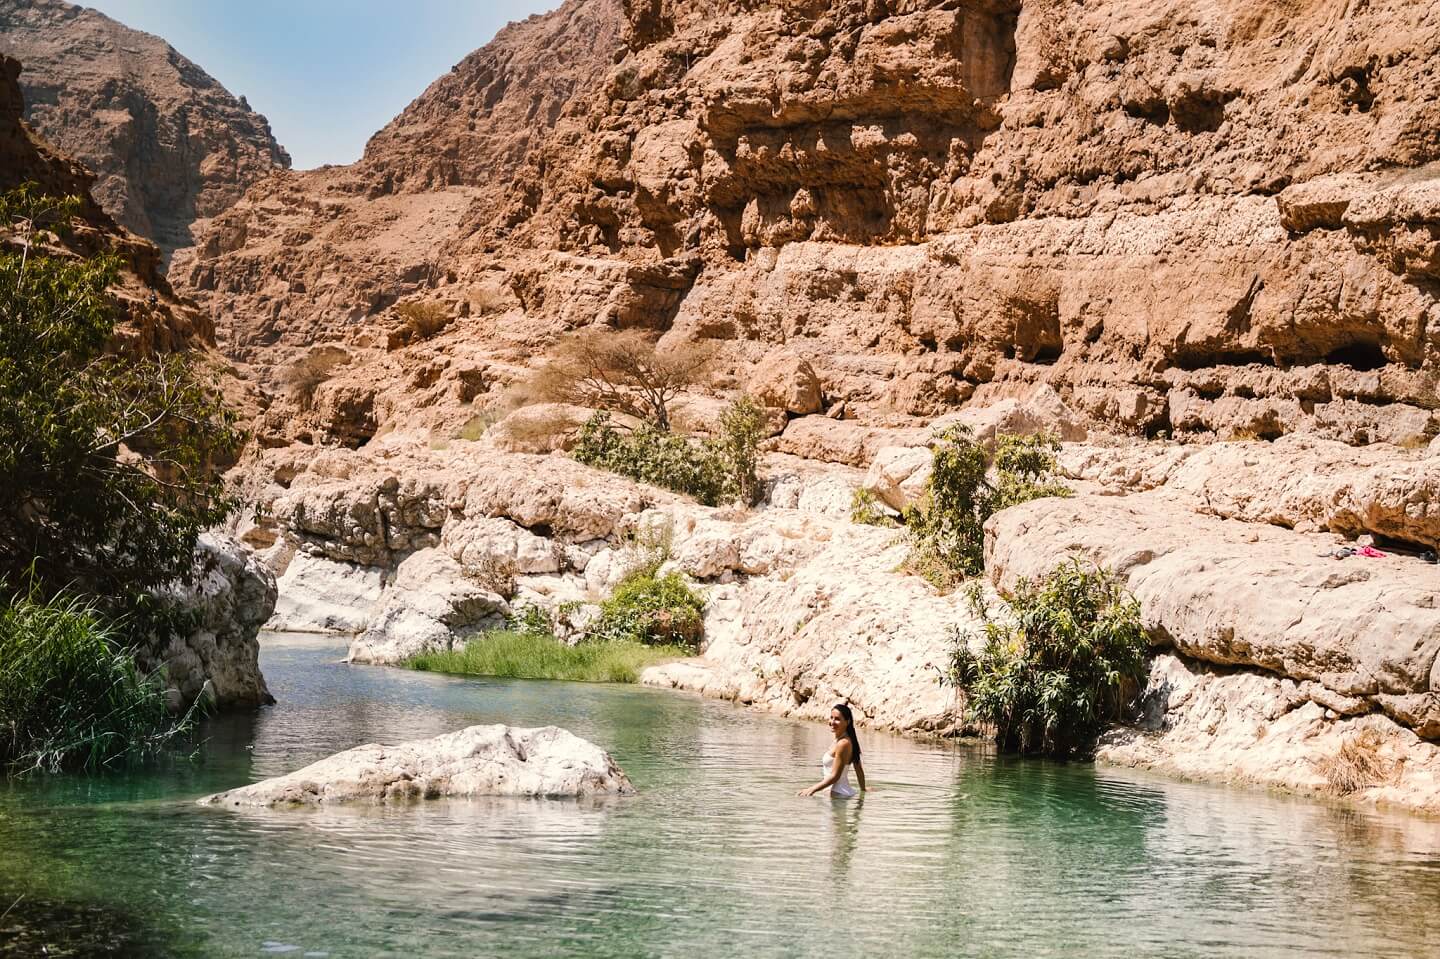 Wadi al shab pool